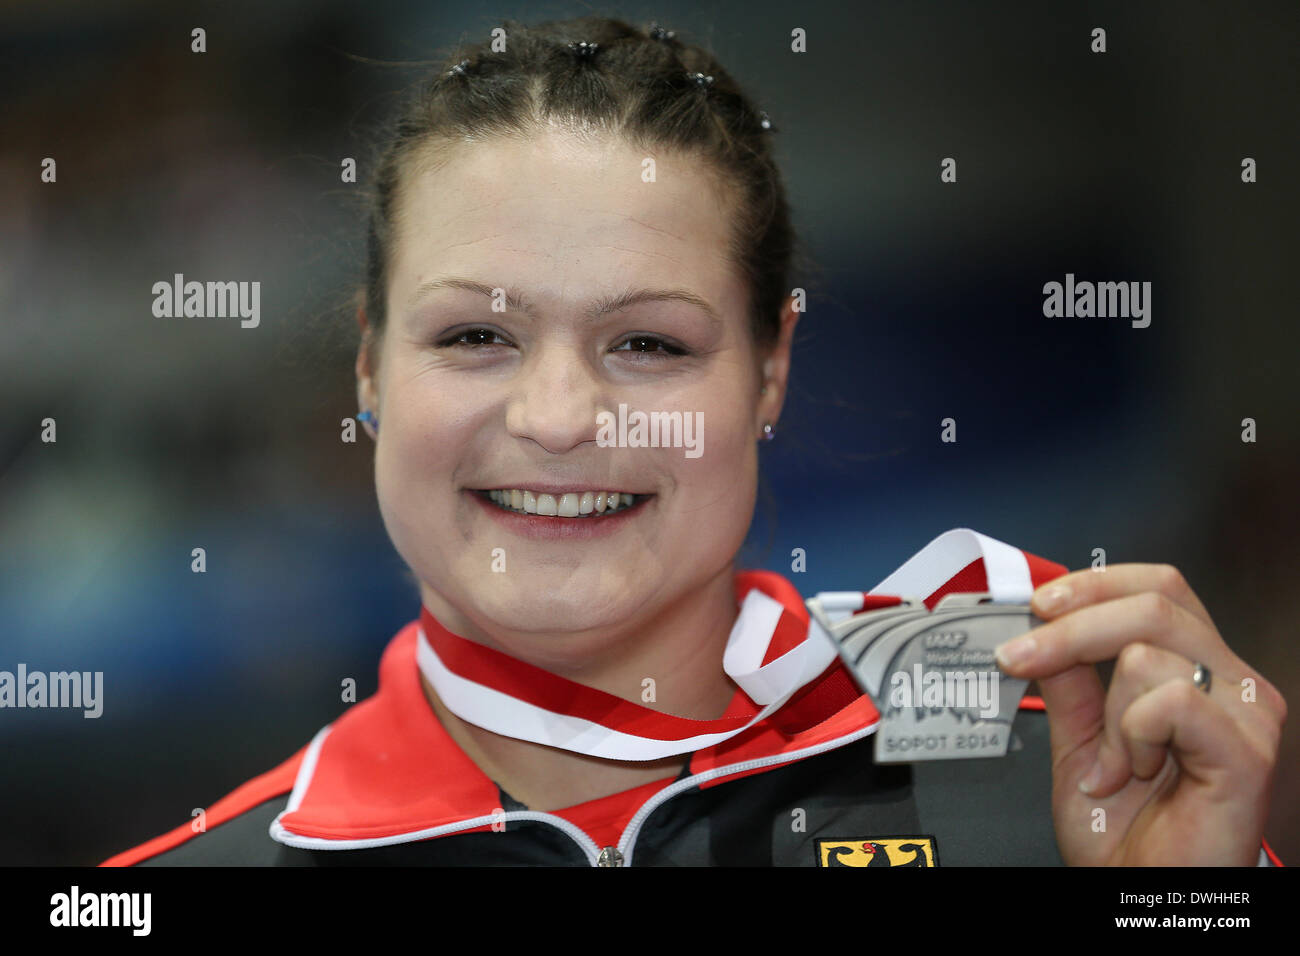 German Shot Putter Christina Schwanitz Presents Her Silver Medal During The World Indoor